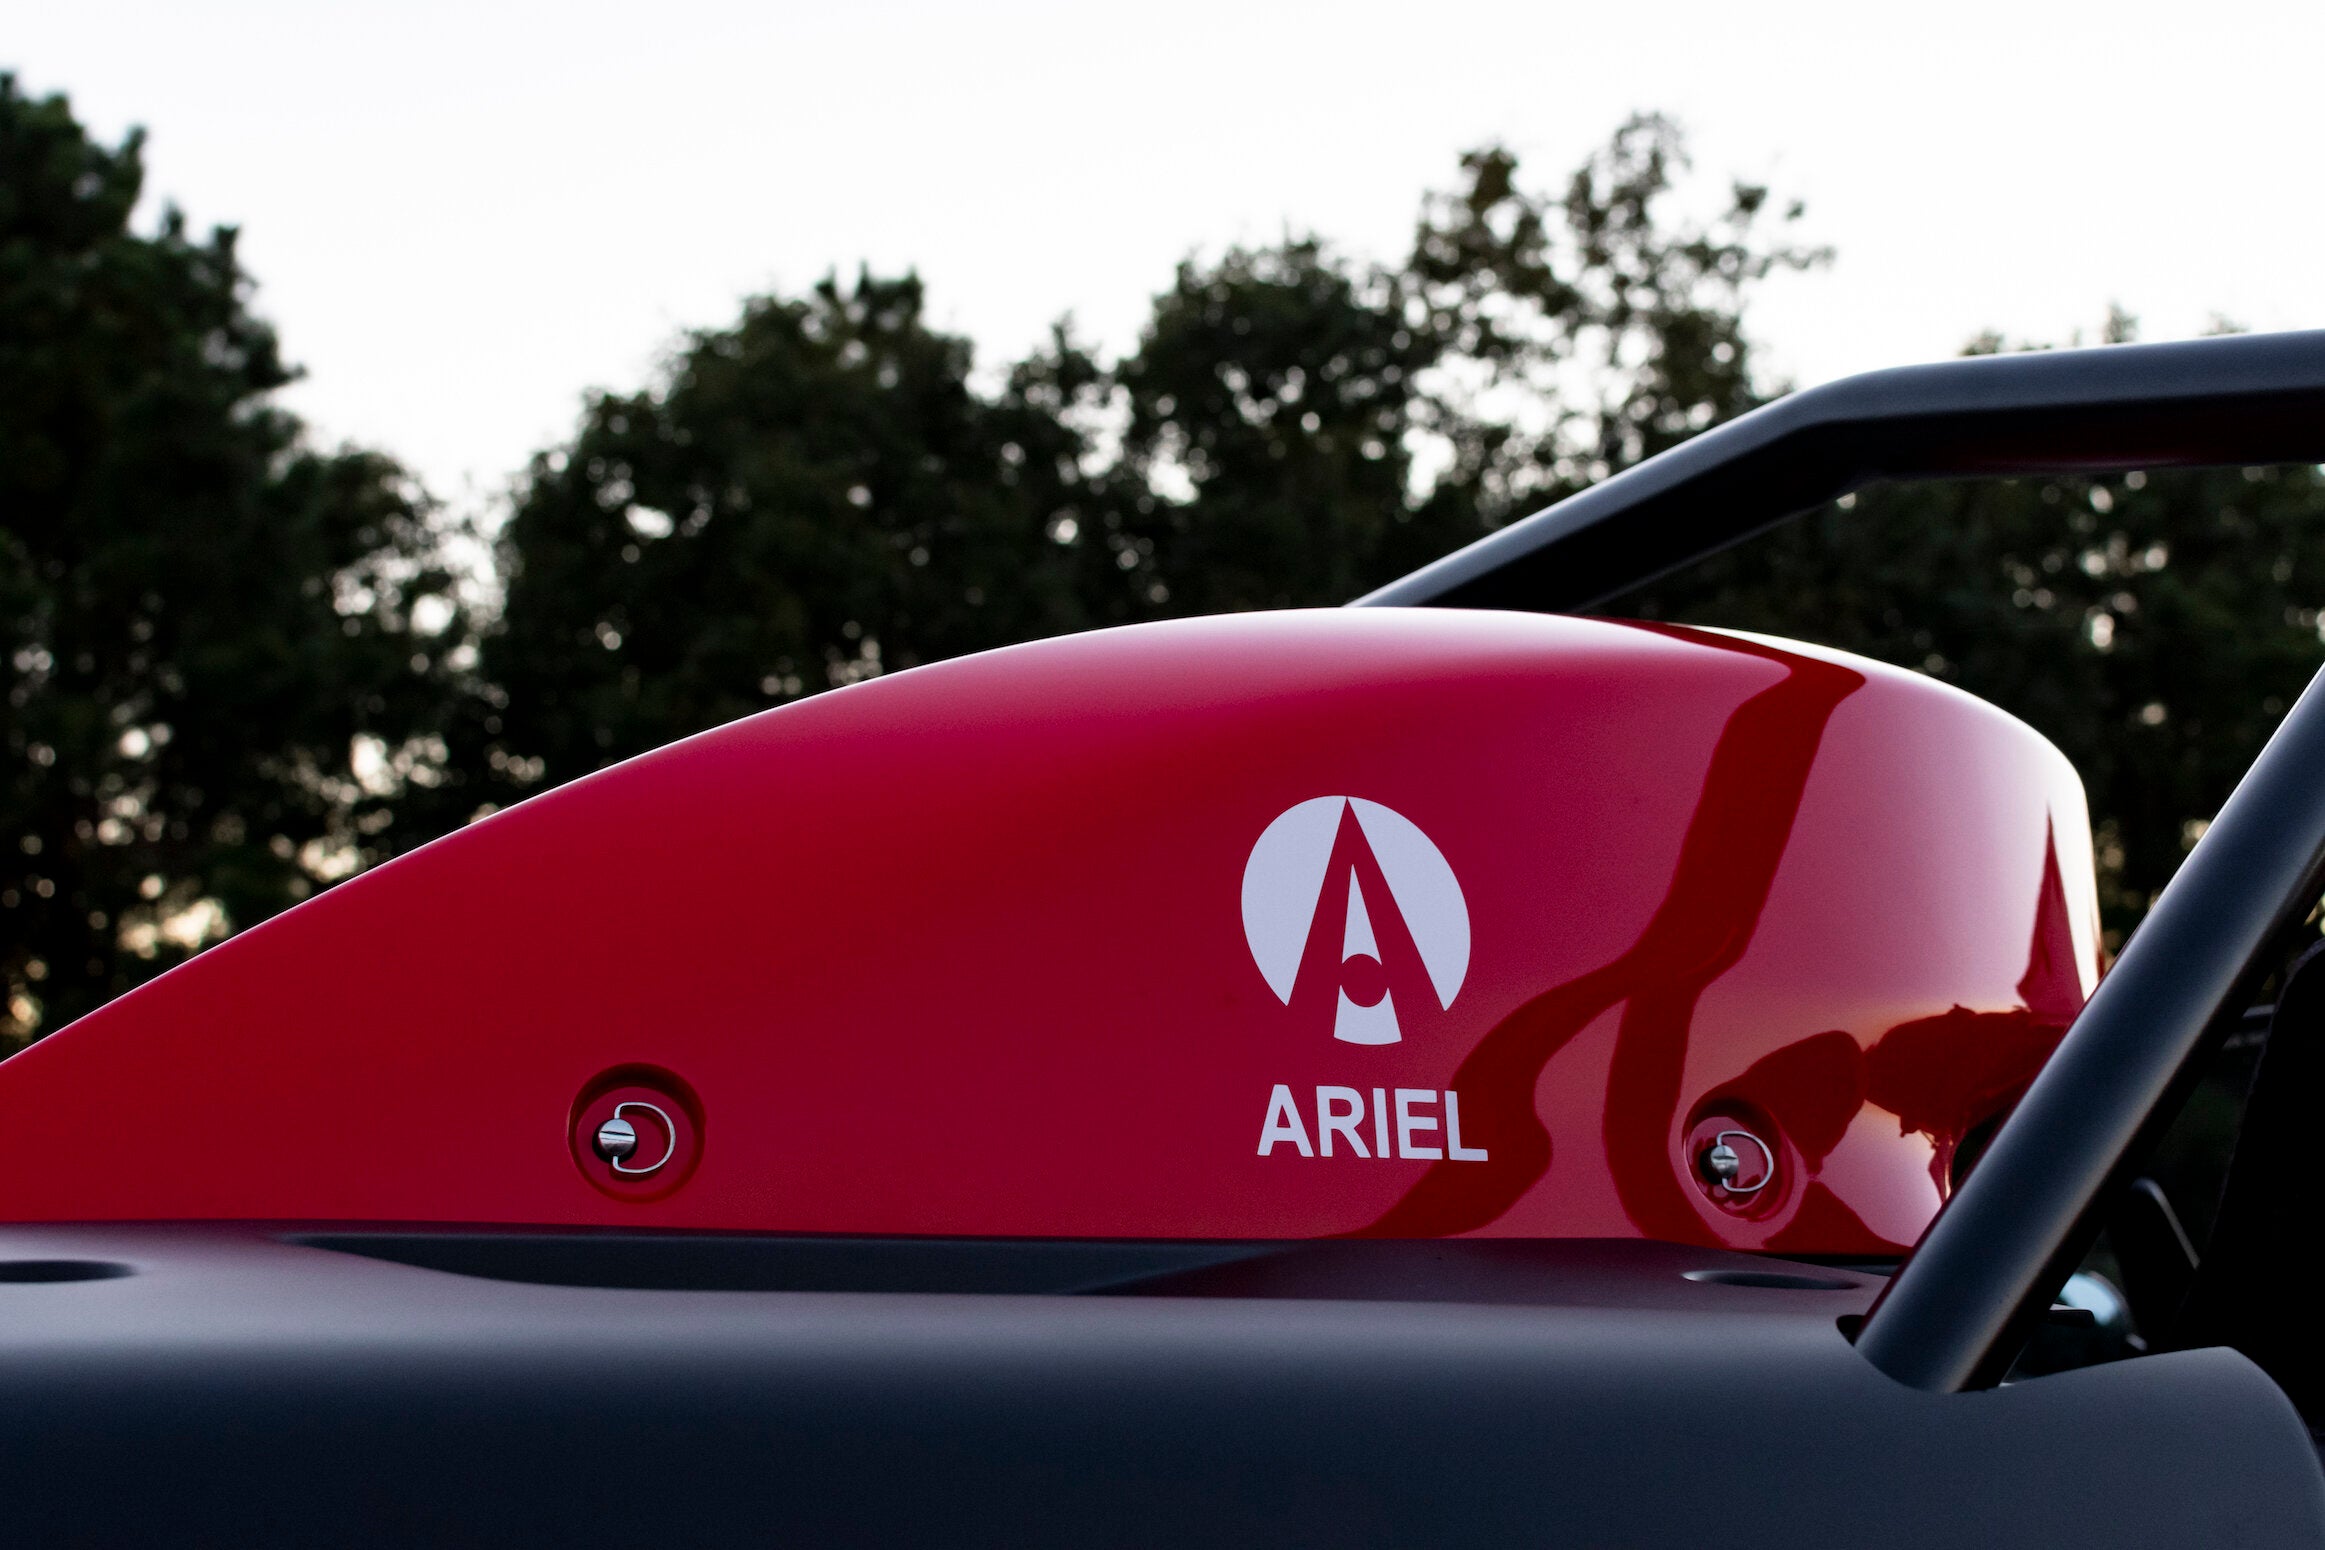 Ariel Motor Company